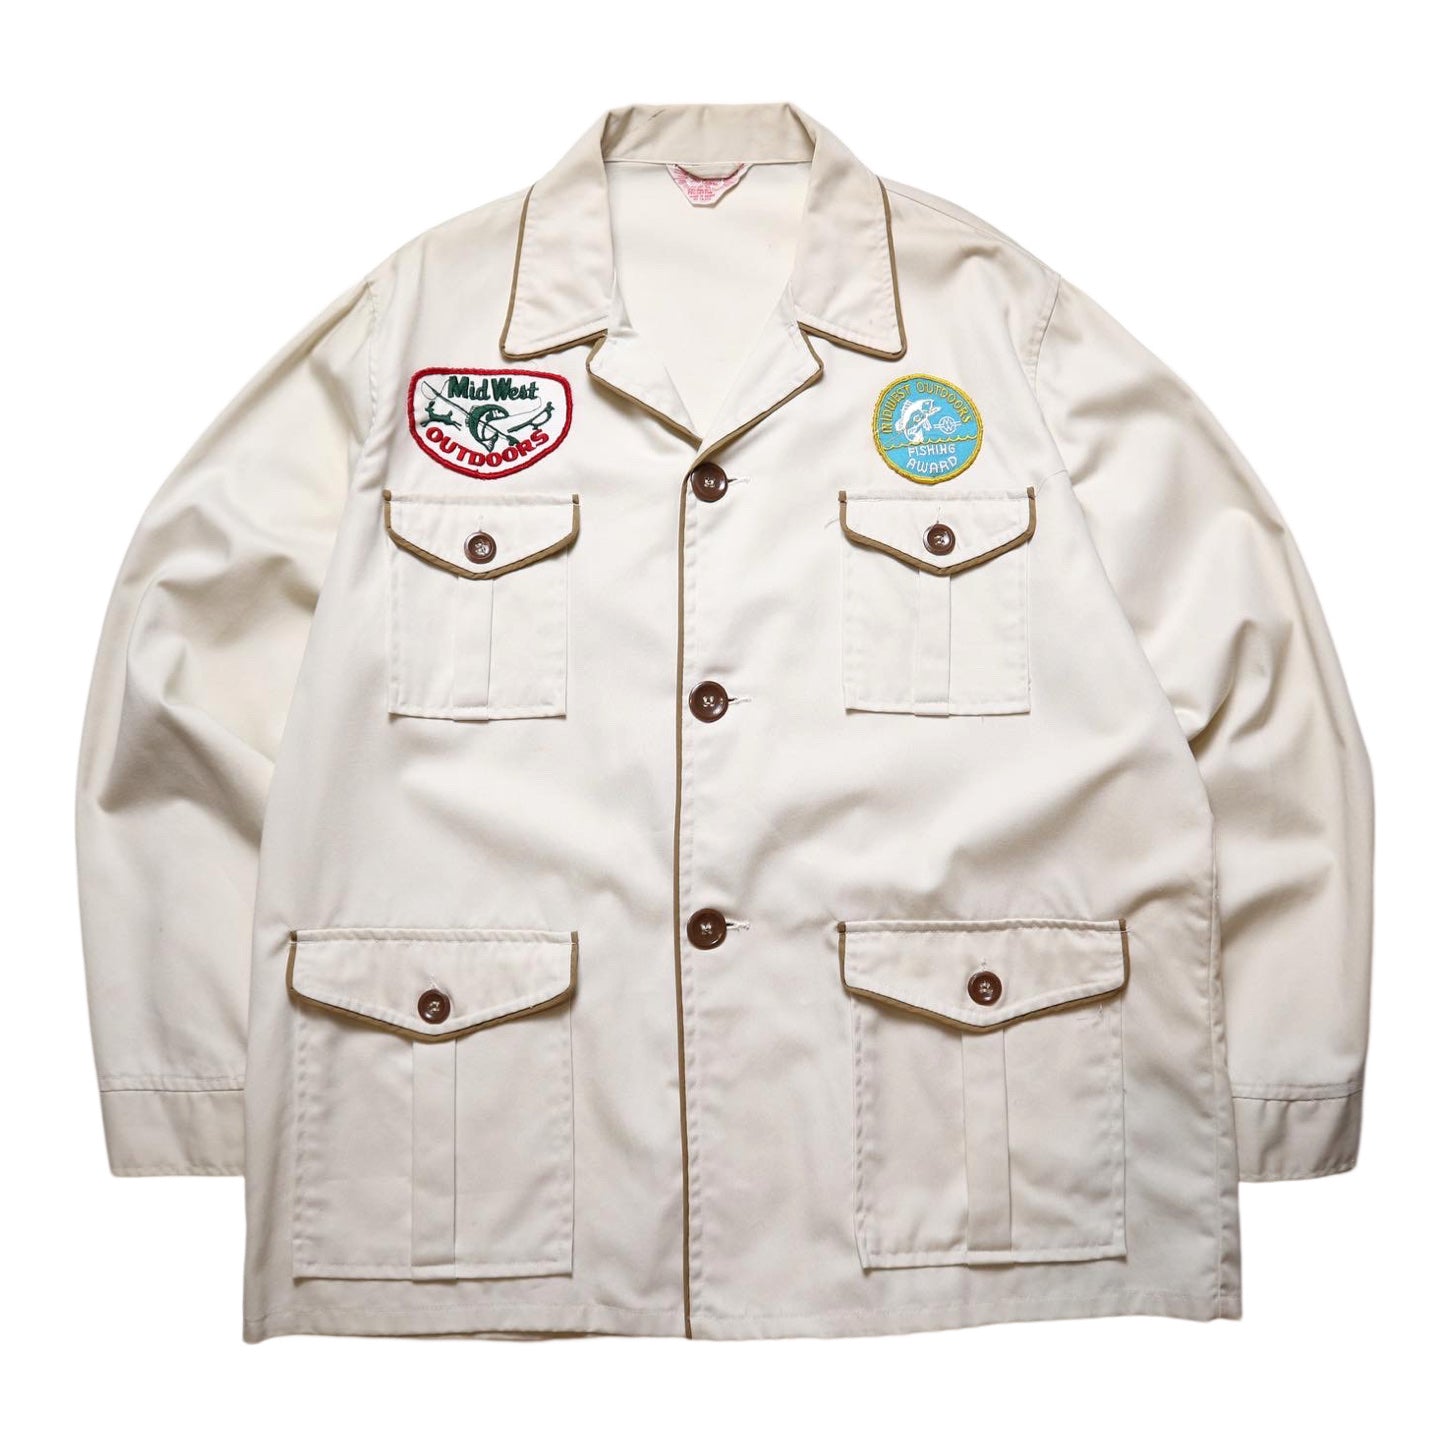 Vintage 1960s USA embroidered patch safari jacket vintage coat – 富士鳥古著